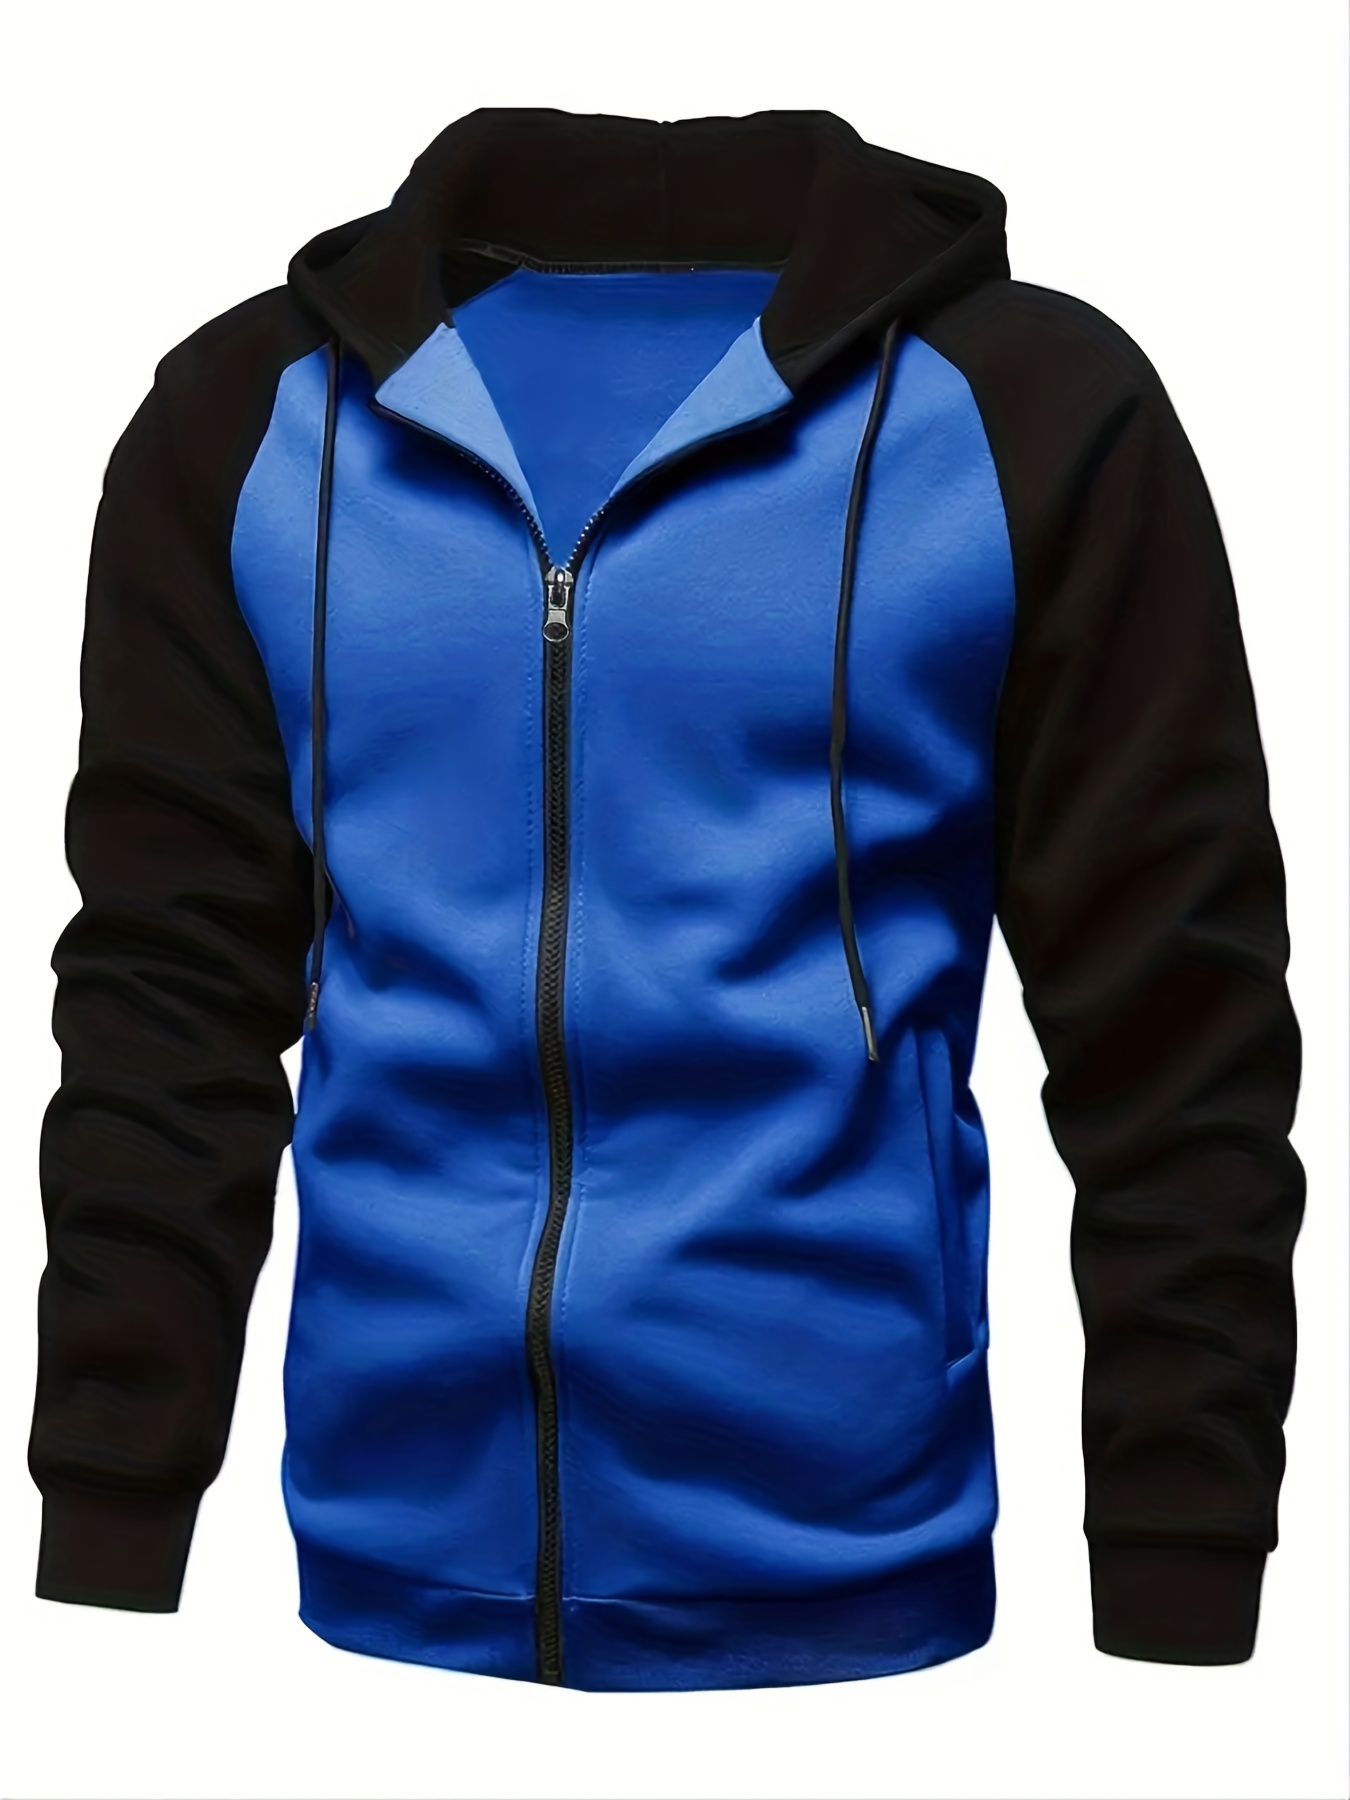 contrast color sport jacket mens casual hooded jacket regular fit coat for spring autumn outdoors hiking running details 15